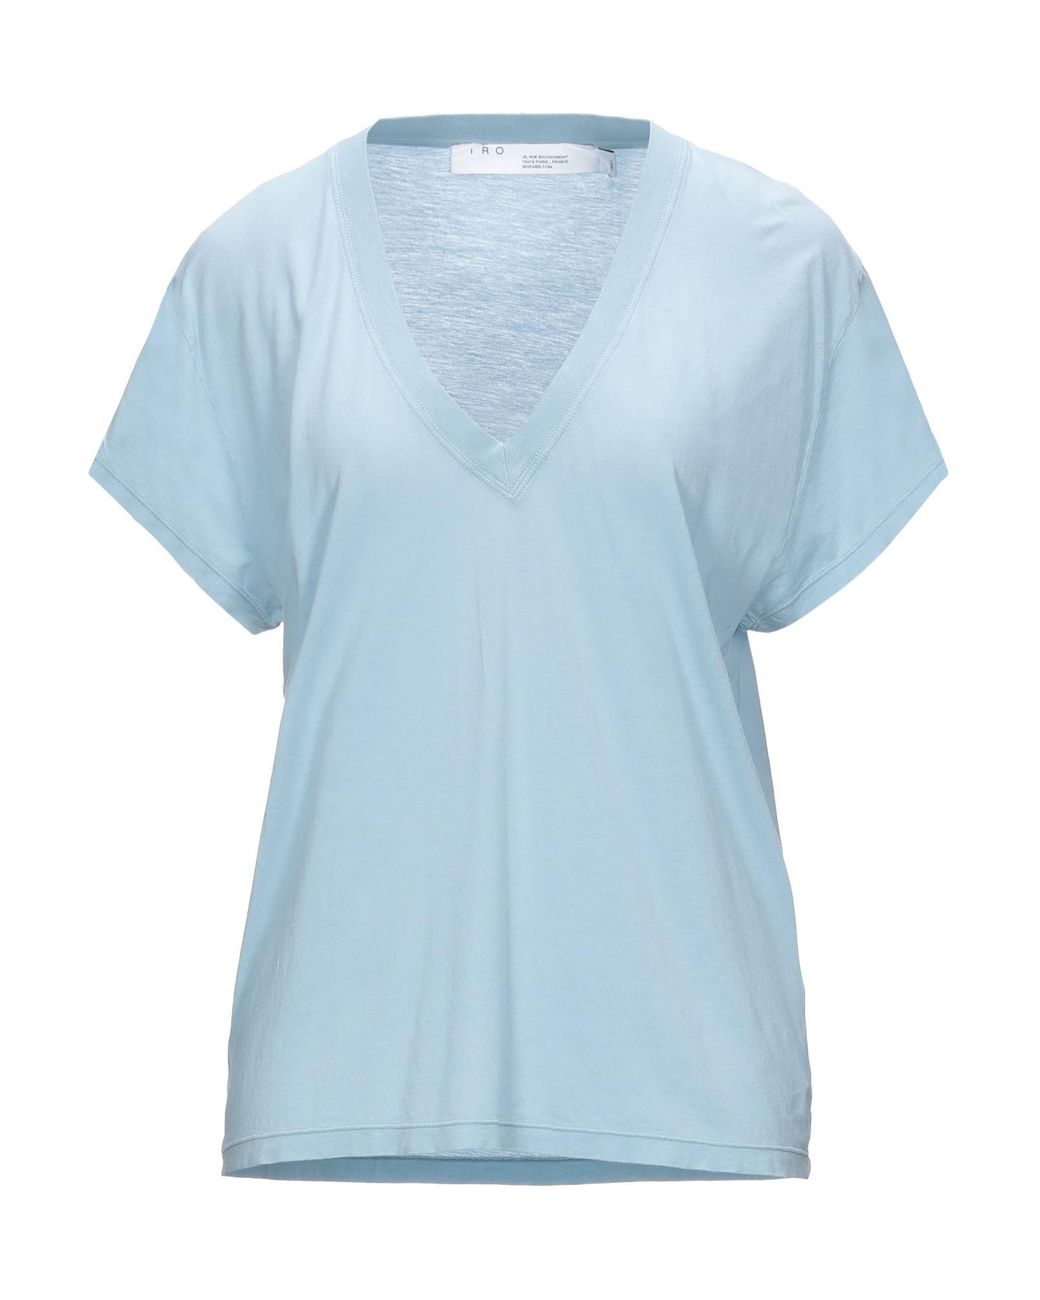 IRO Cotton T-shirt in Pastel Blue (Blue) - Lyst